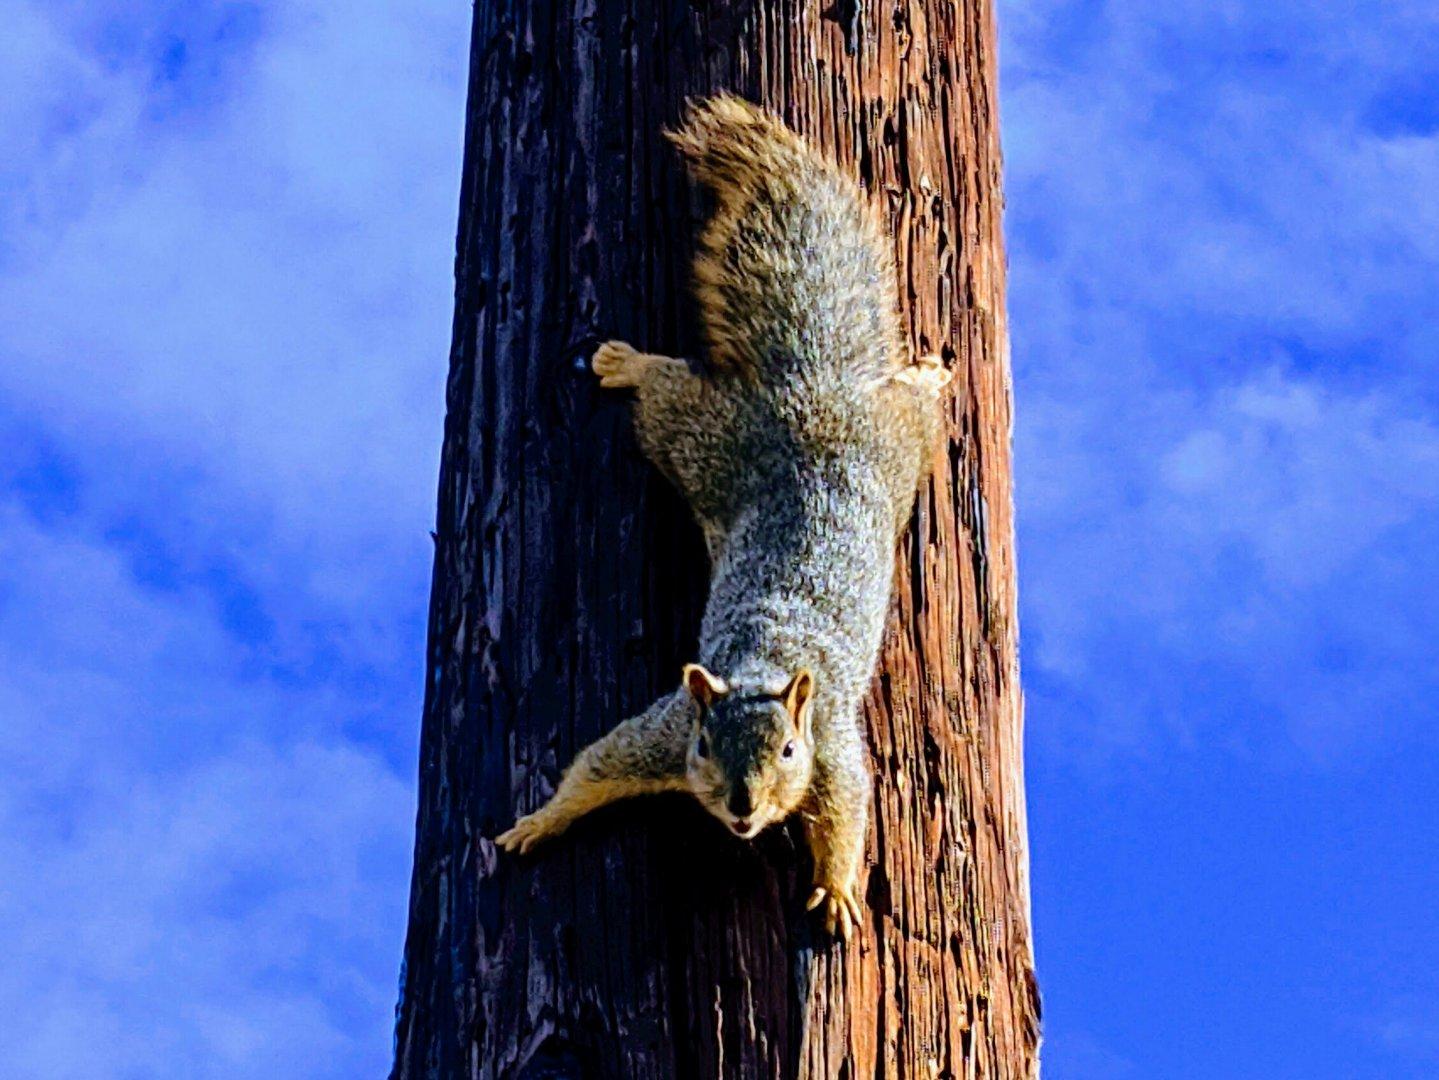 Squirrel climbing down a telephone pole